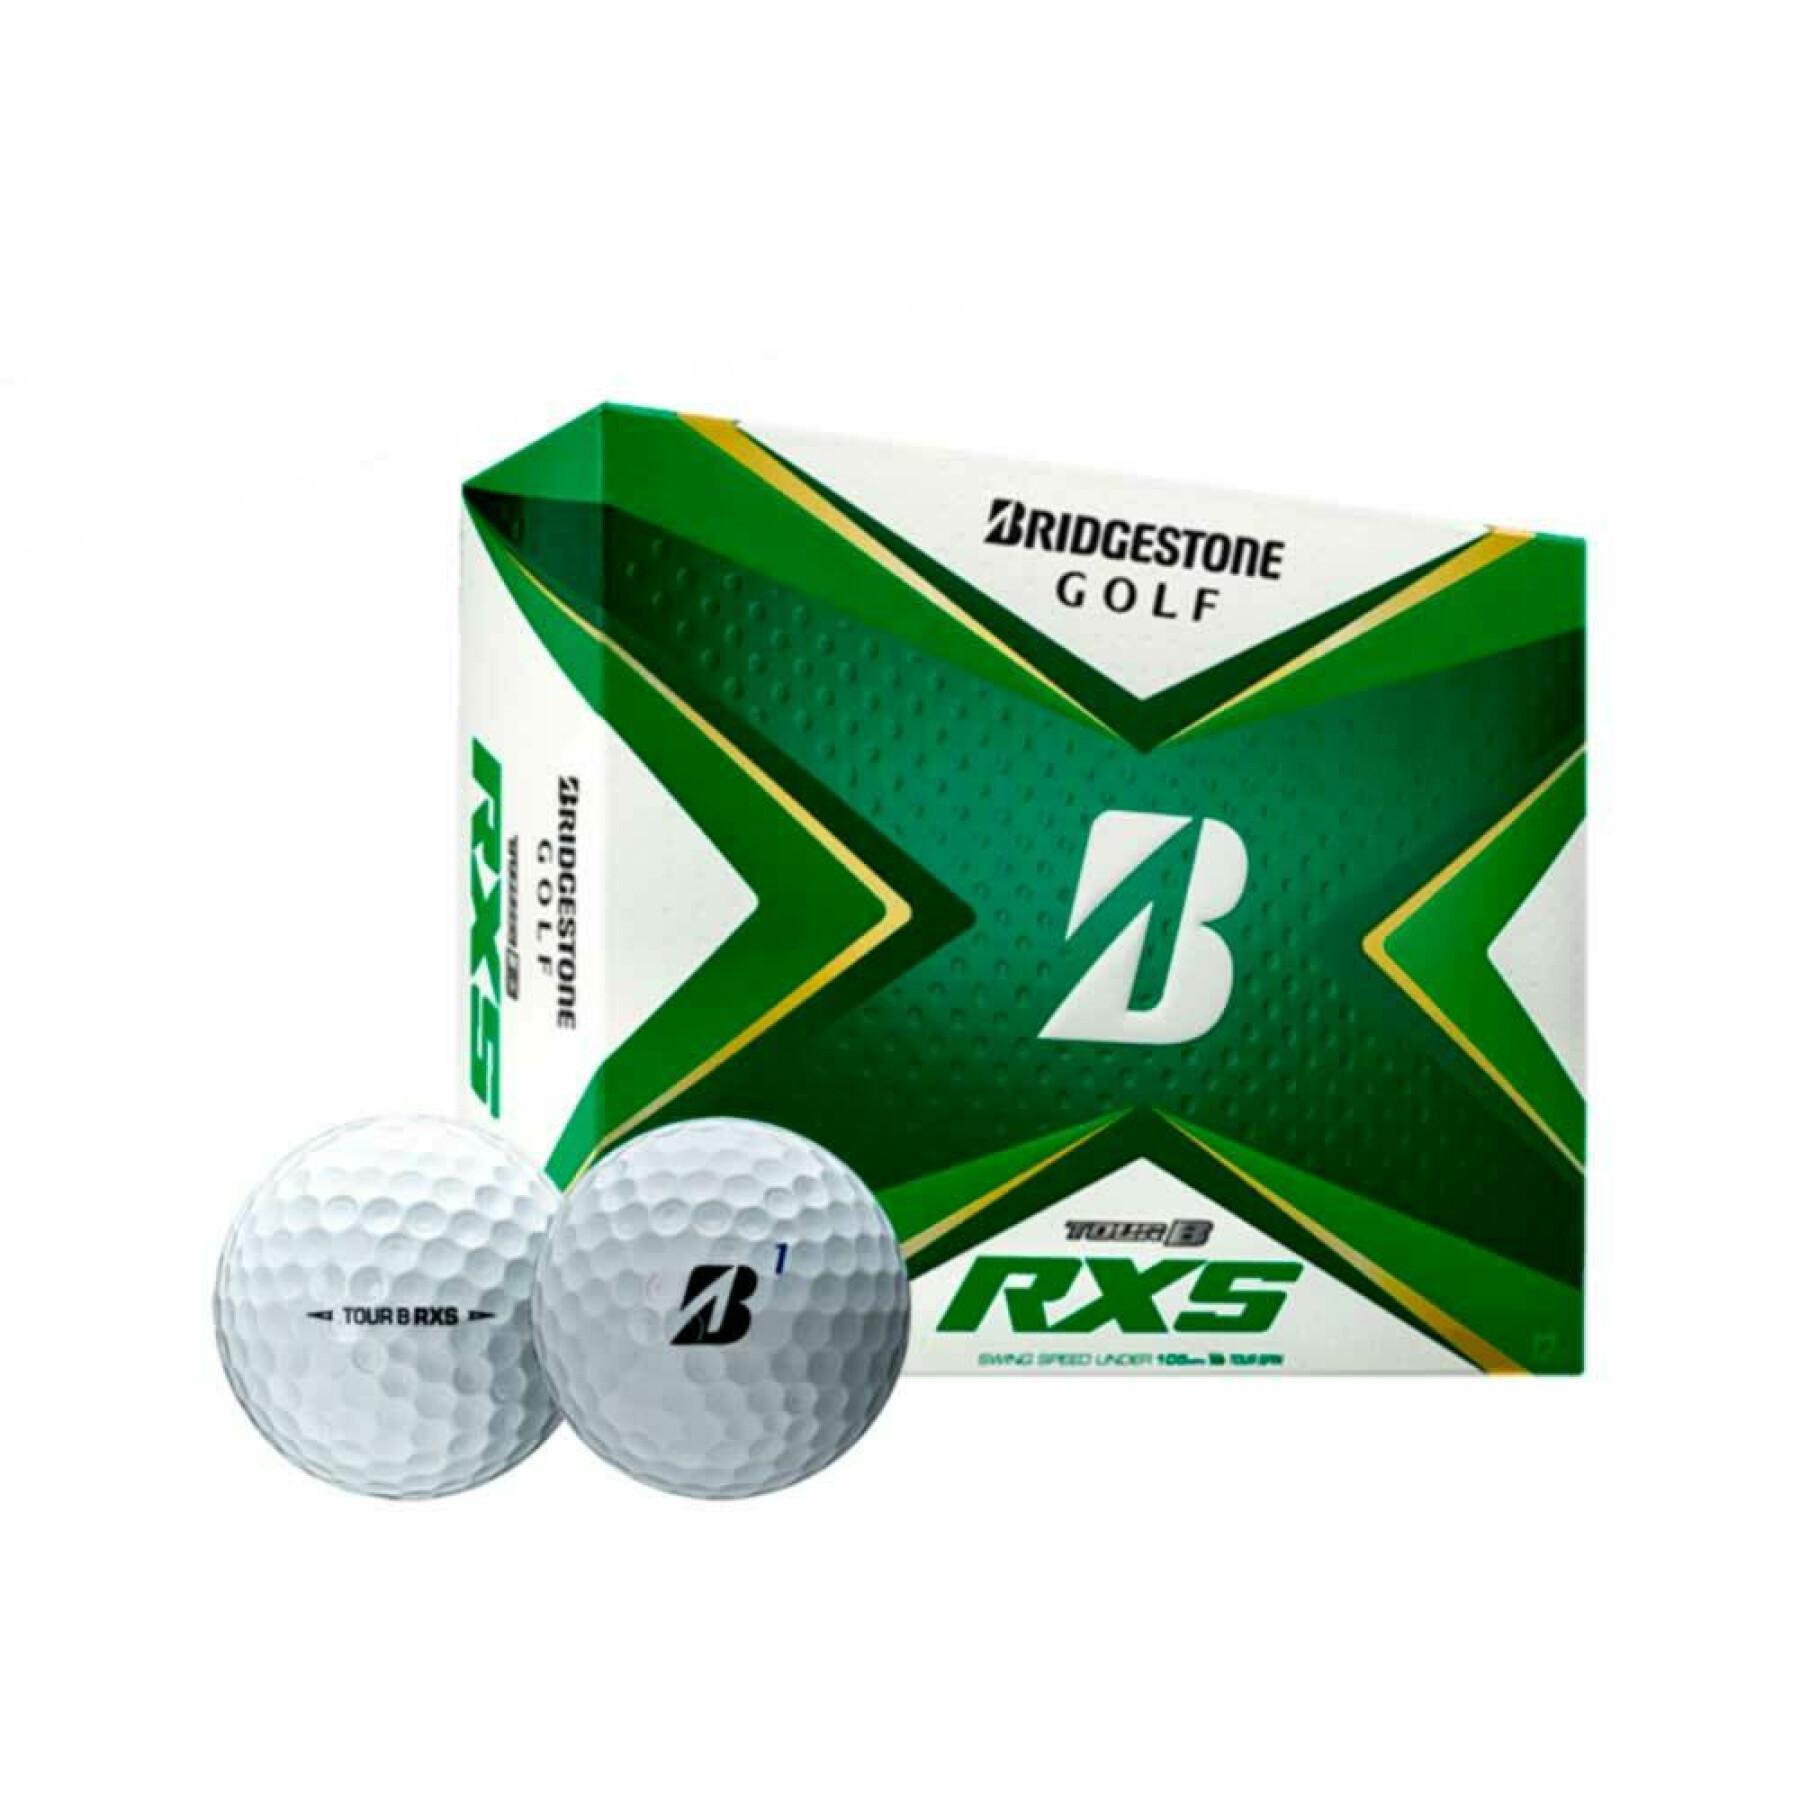 Golfbälle Bridgestone Tour B RXS